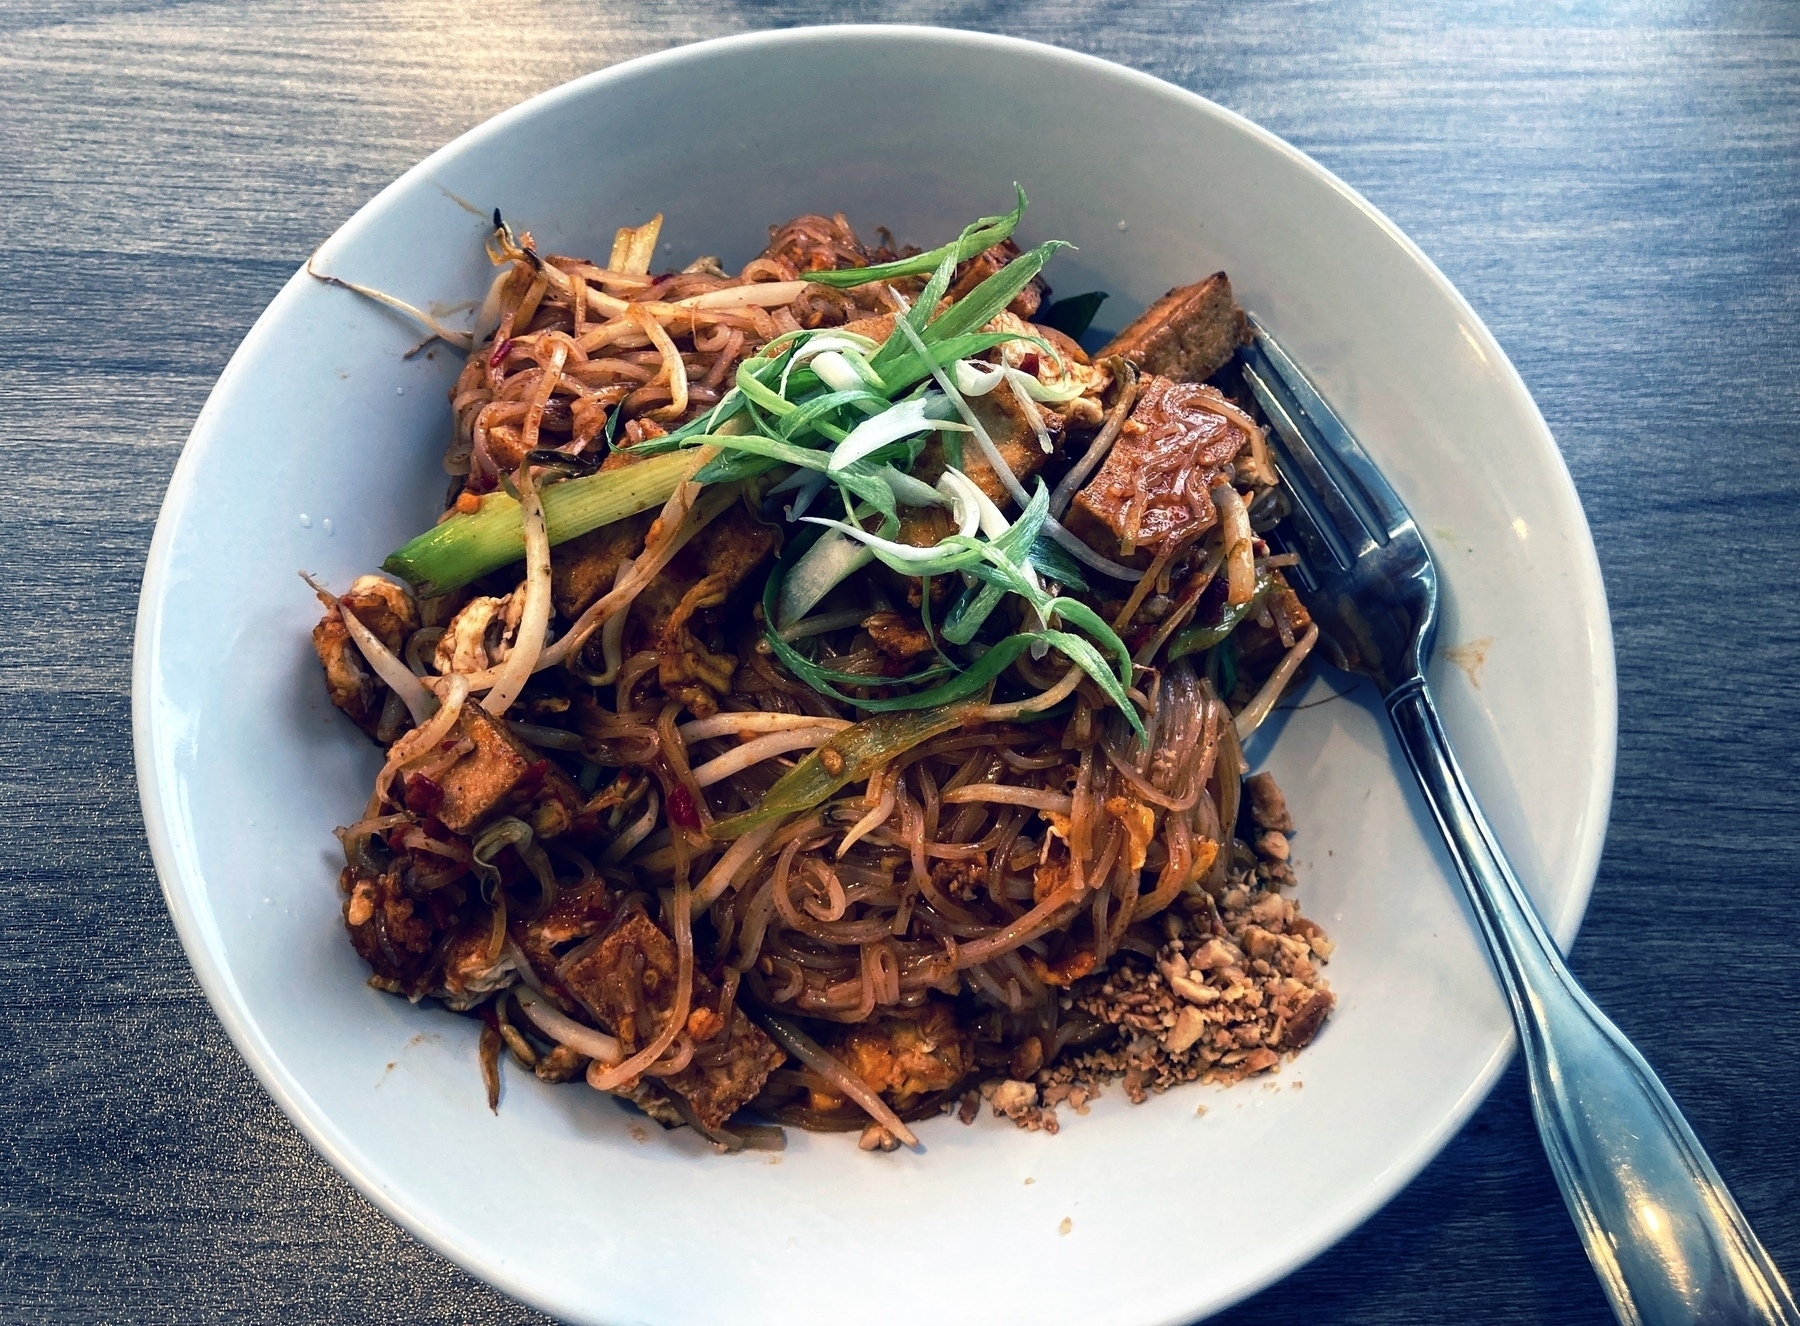 Image: plate of spicy tofu pad thai